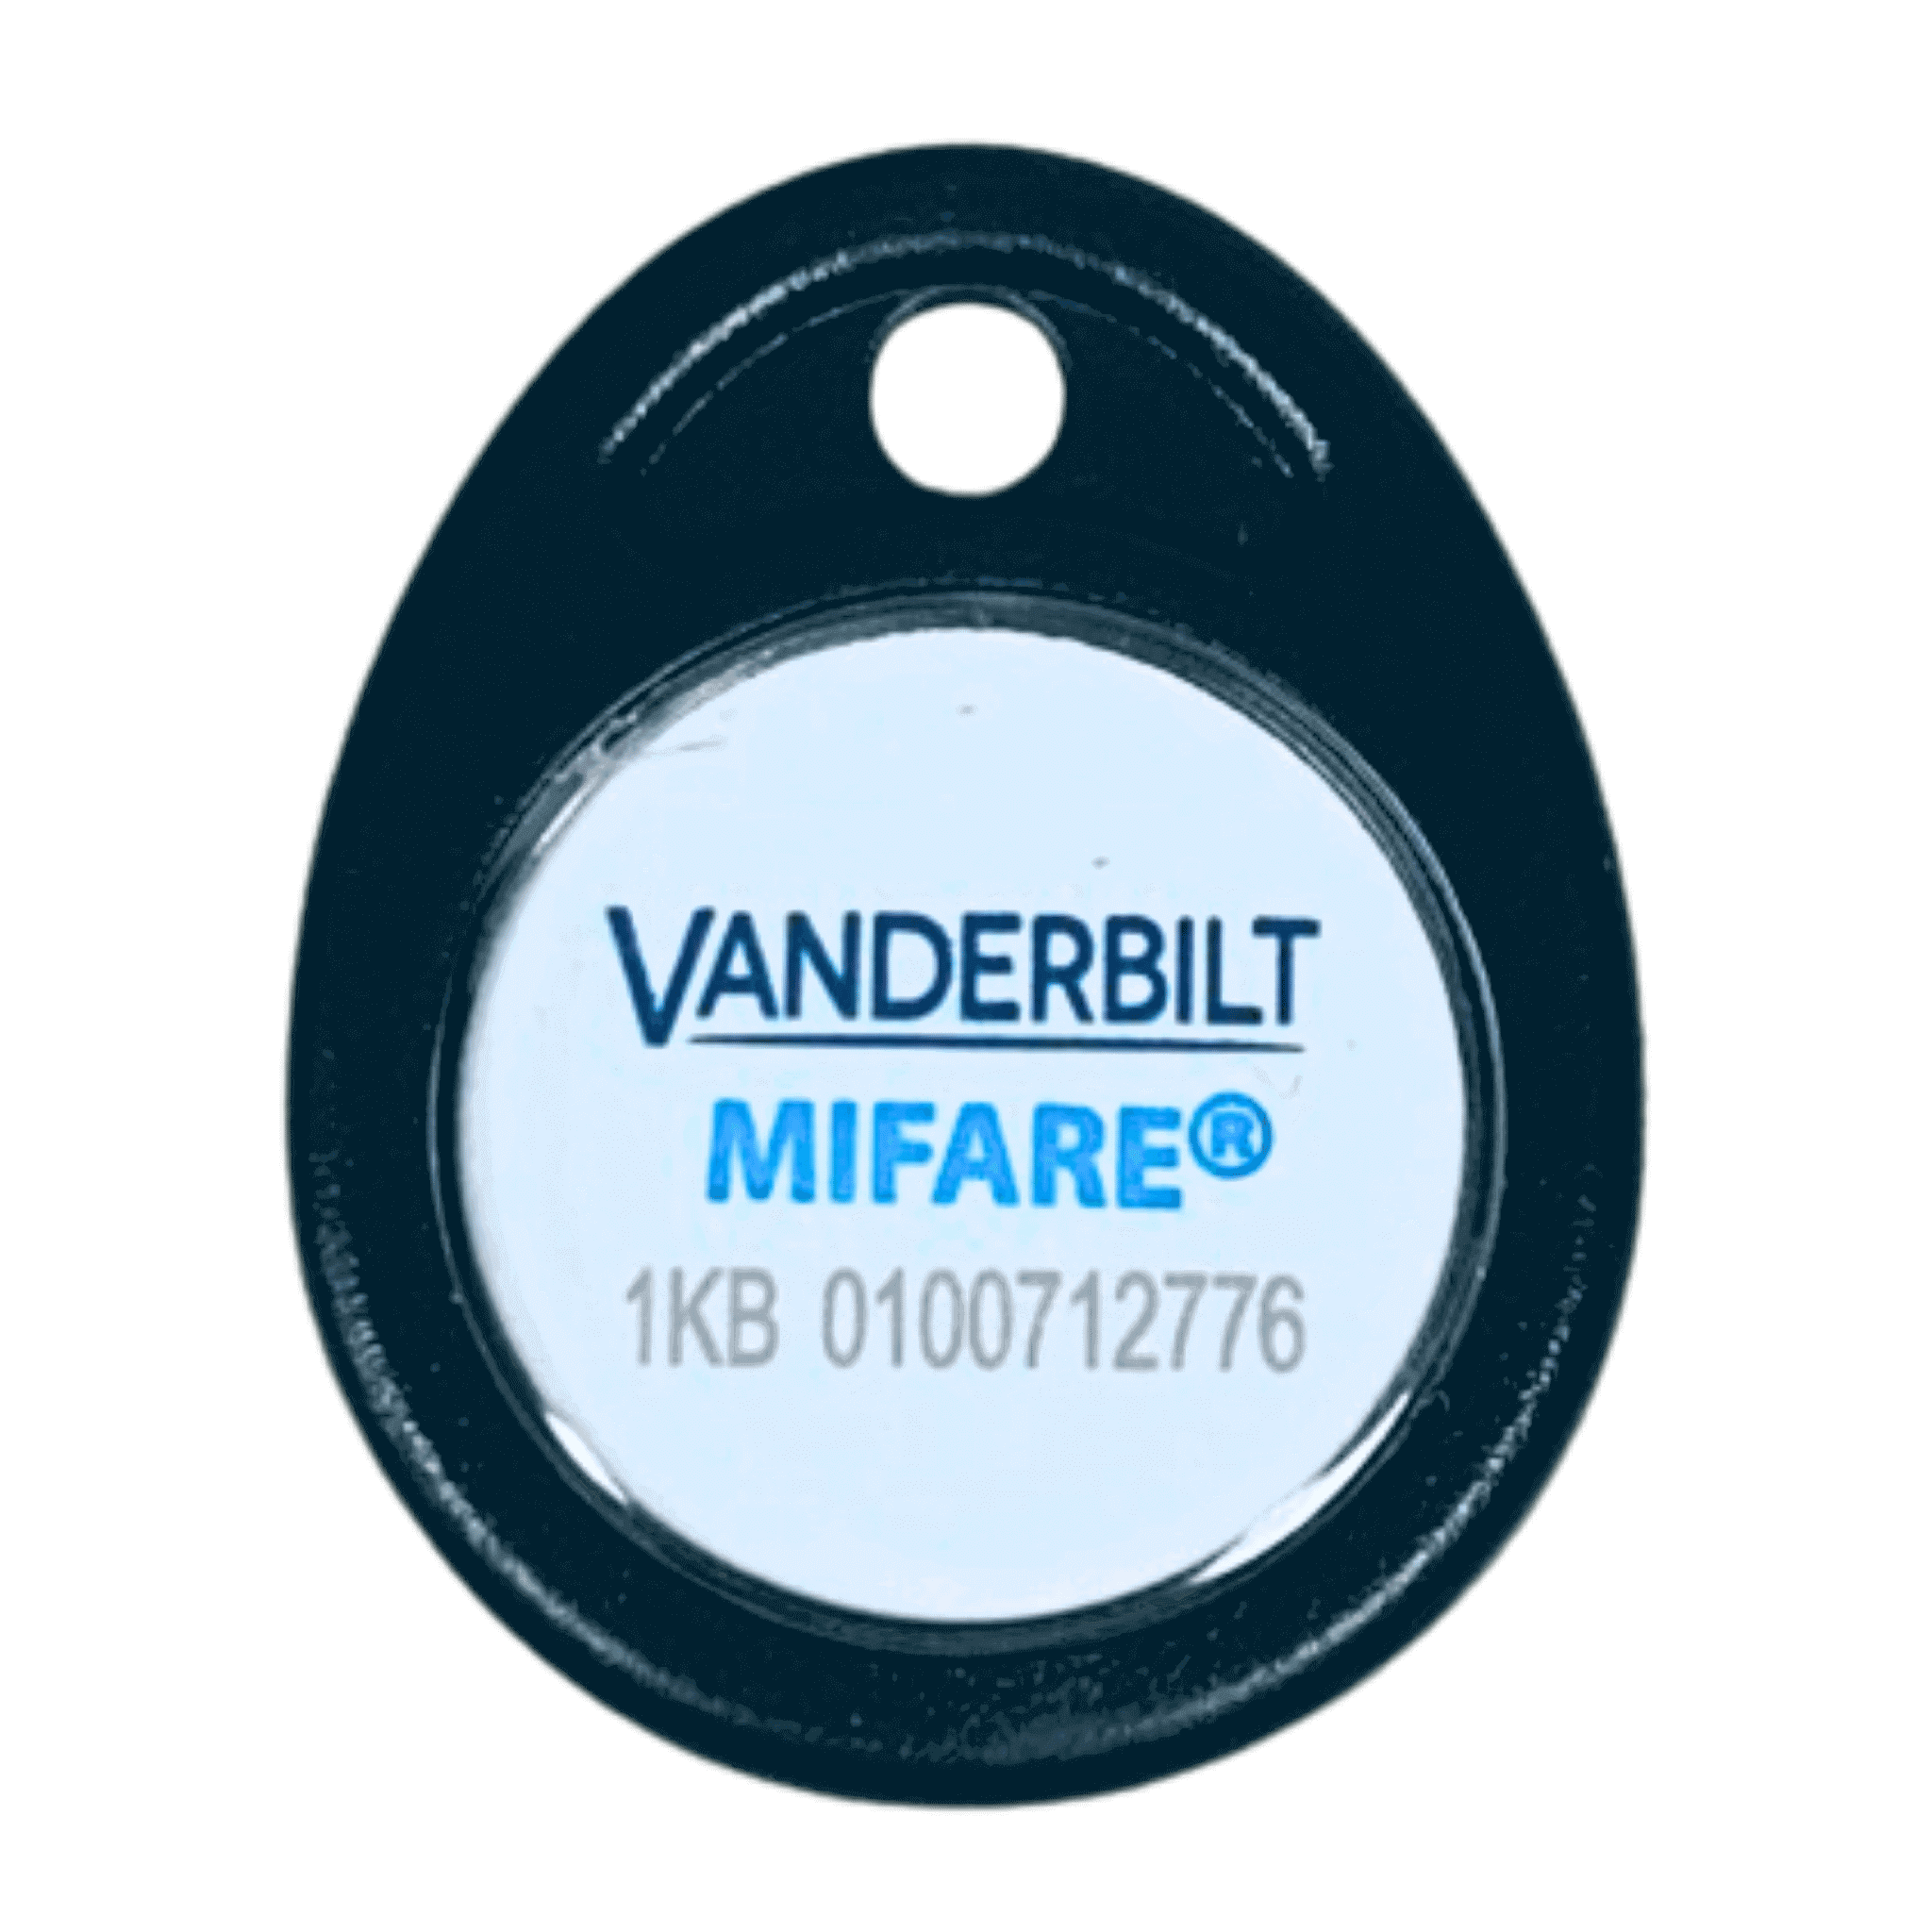 Vanderbilt MIFARE® Proximity Keyfobs